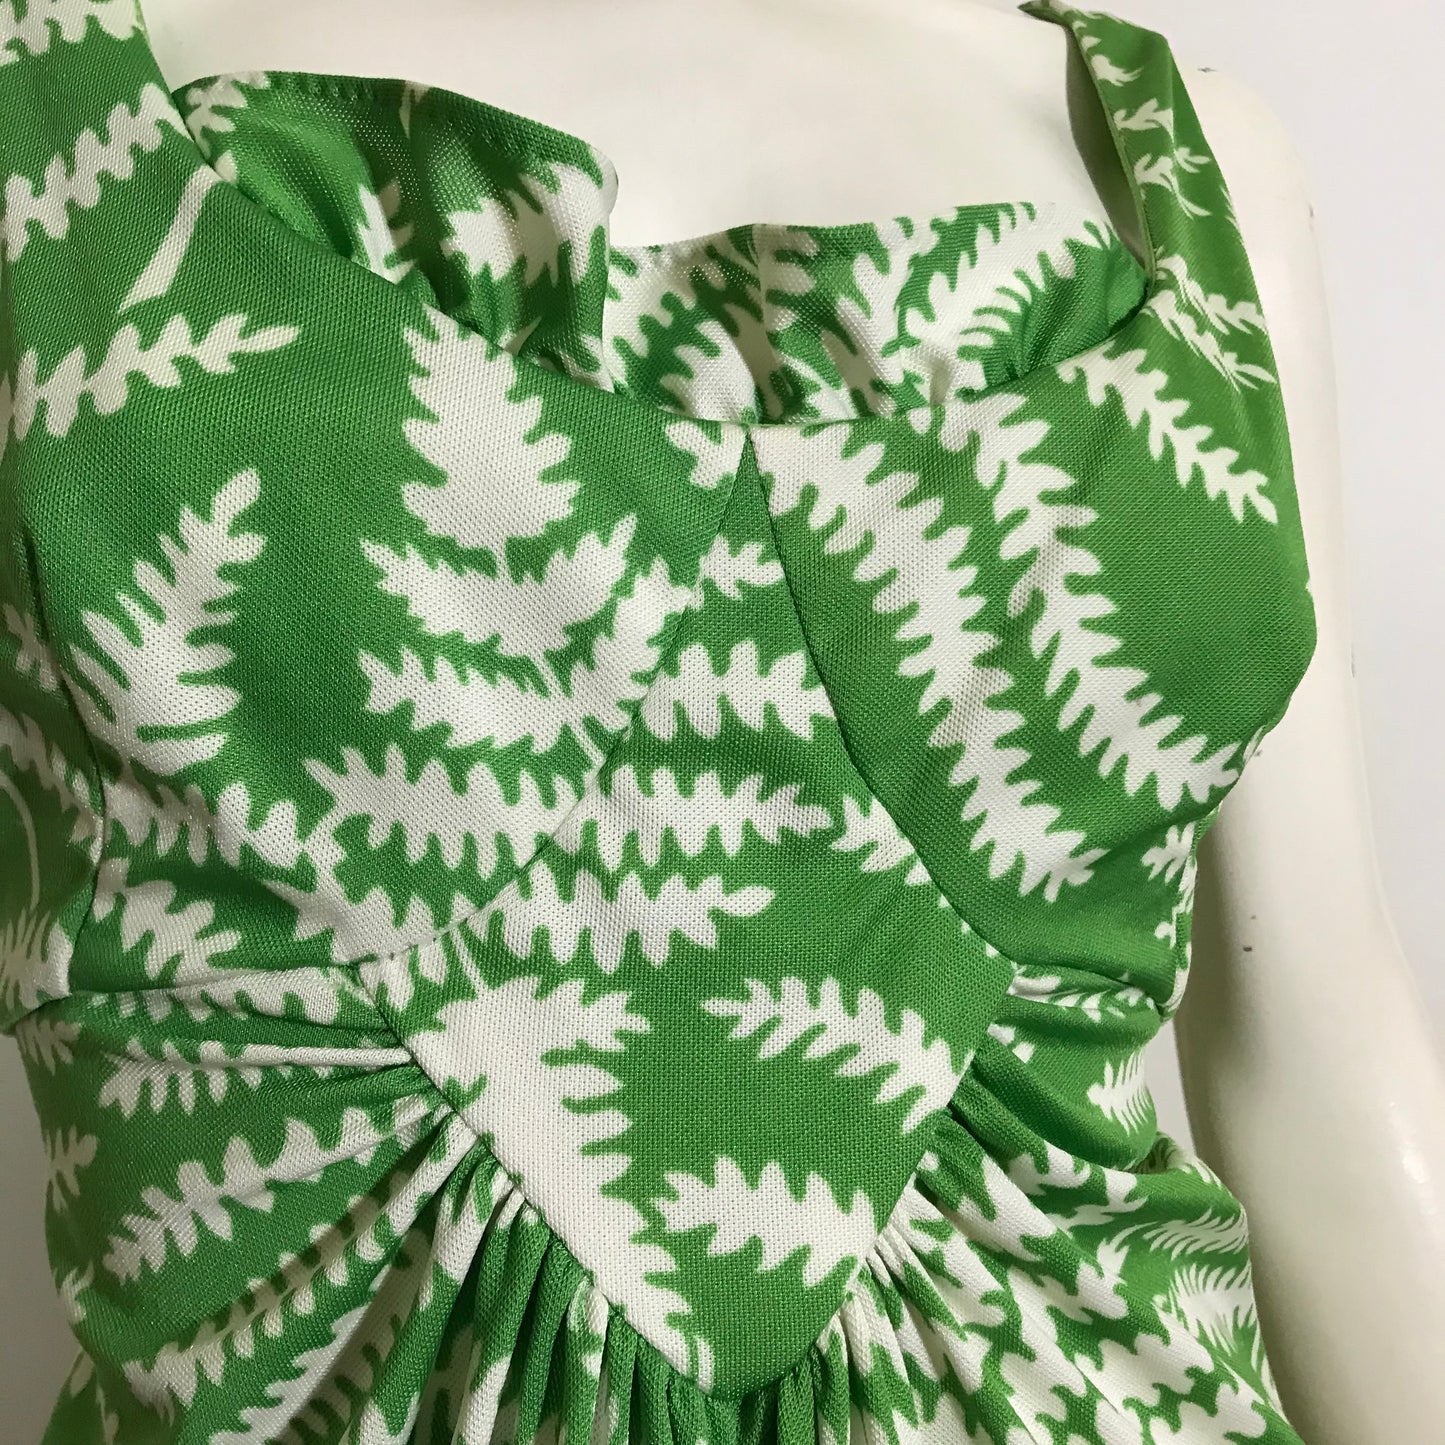 Fern Print Ruffled Neckline Tropical Maxi Dress circa 1970s